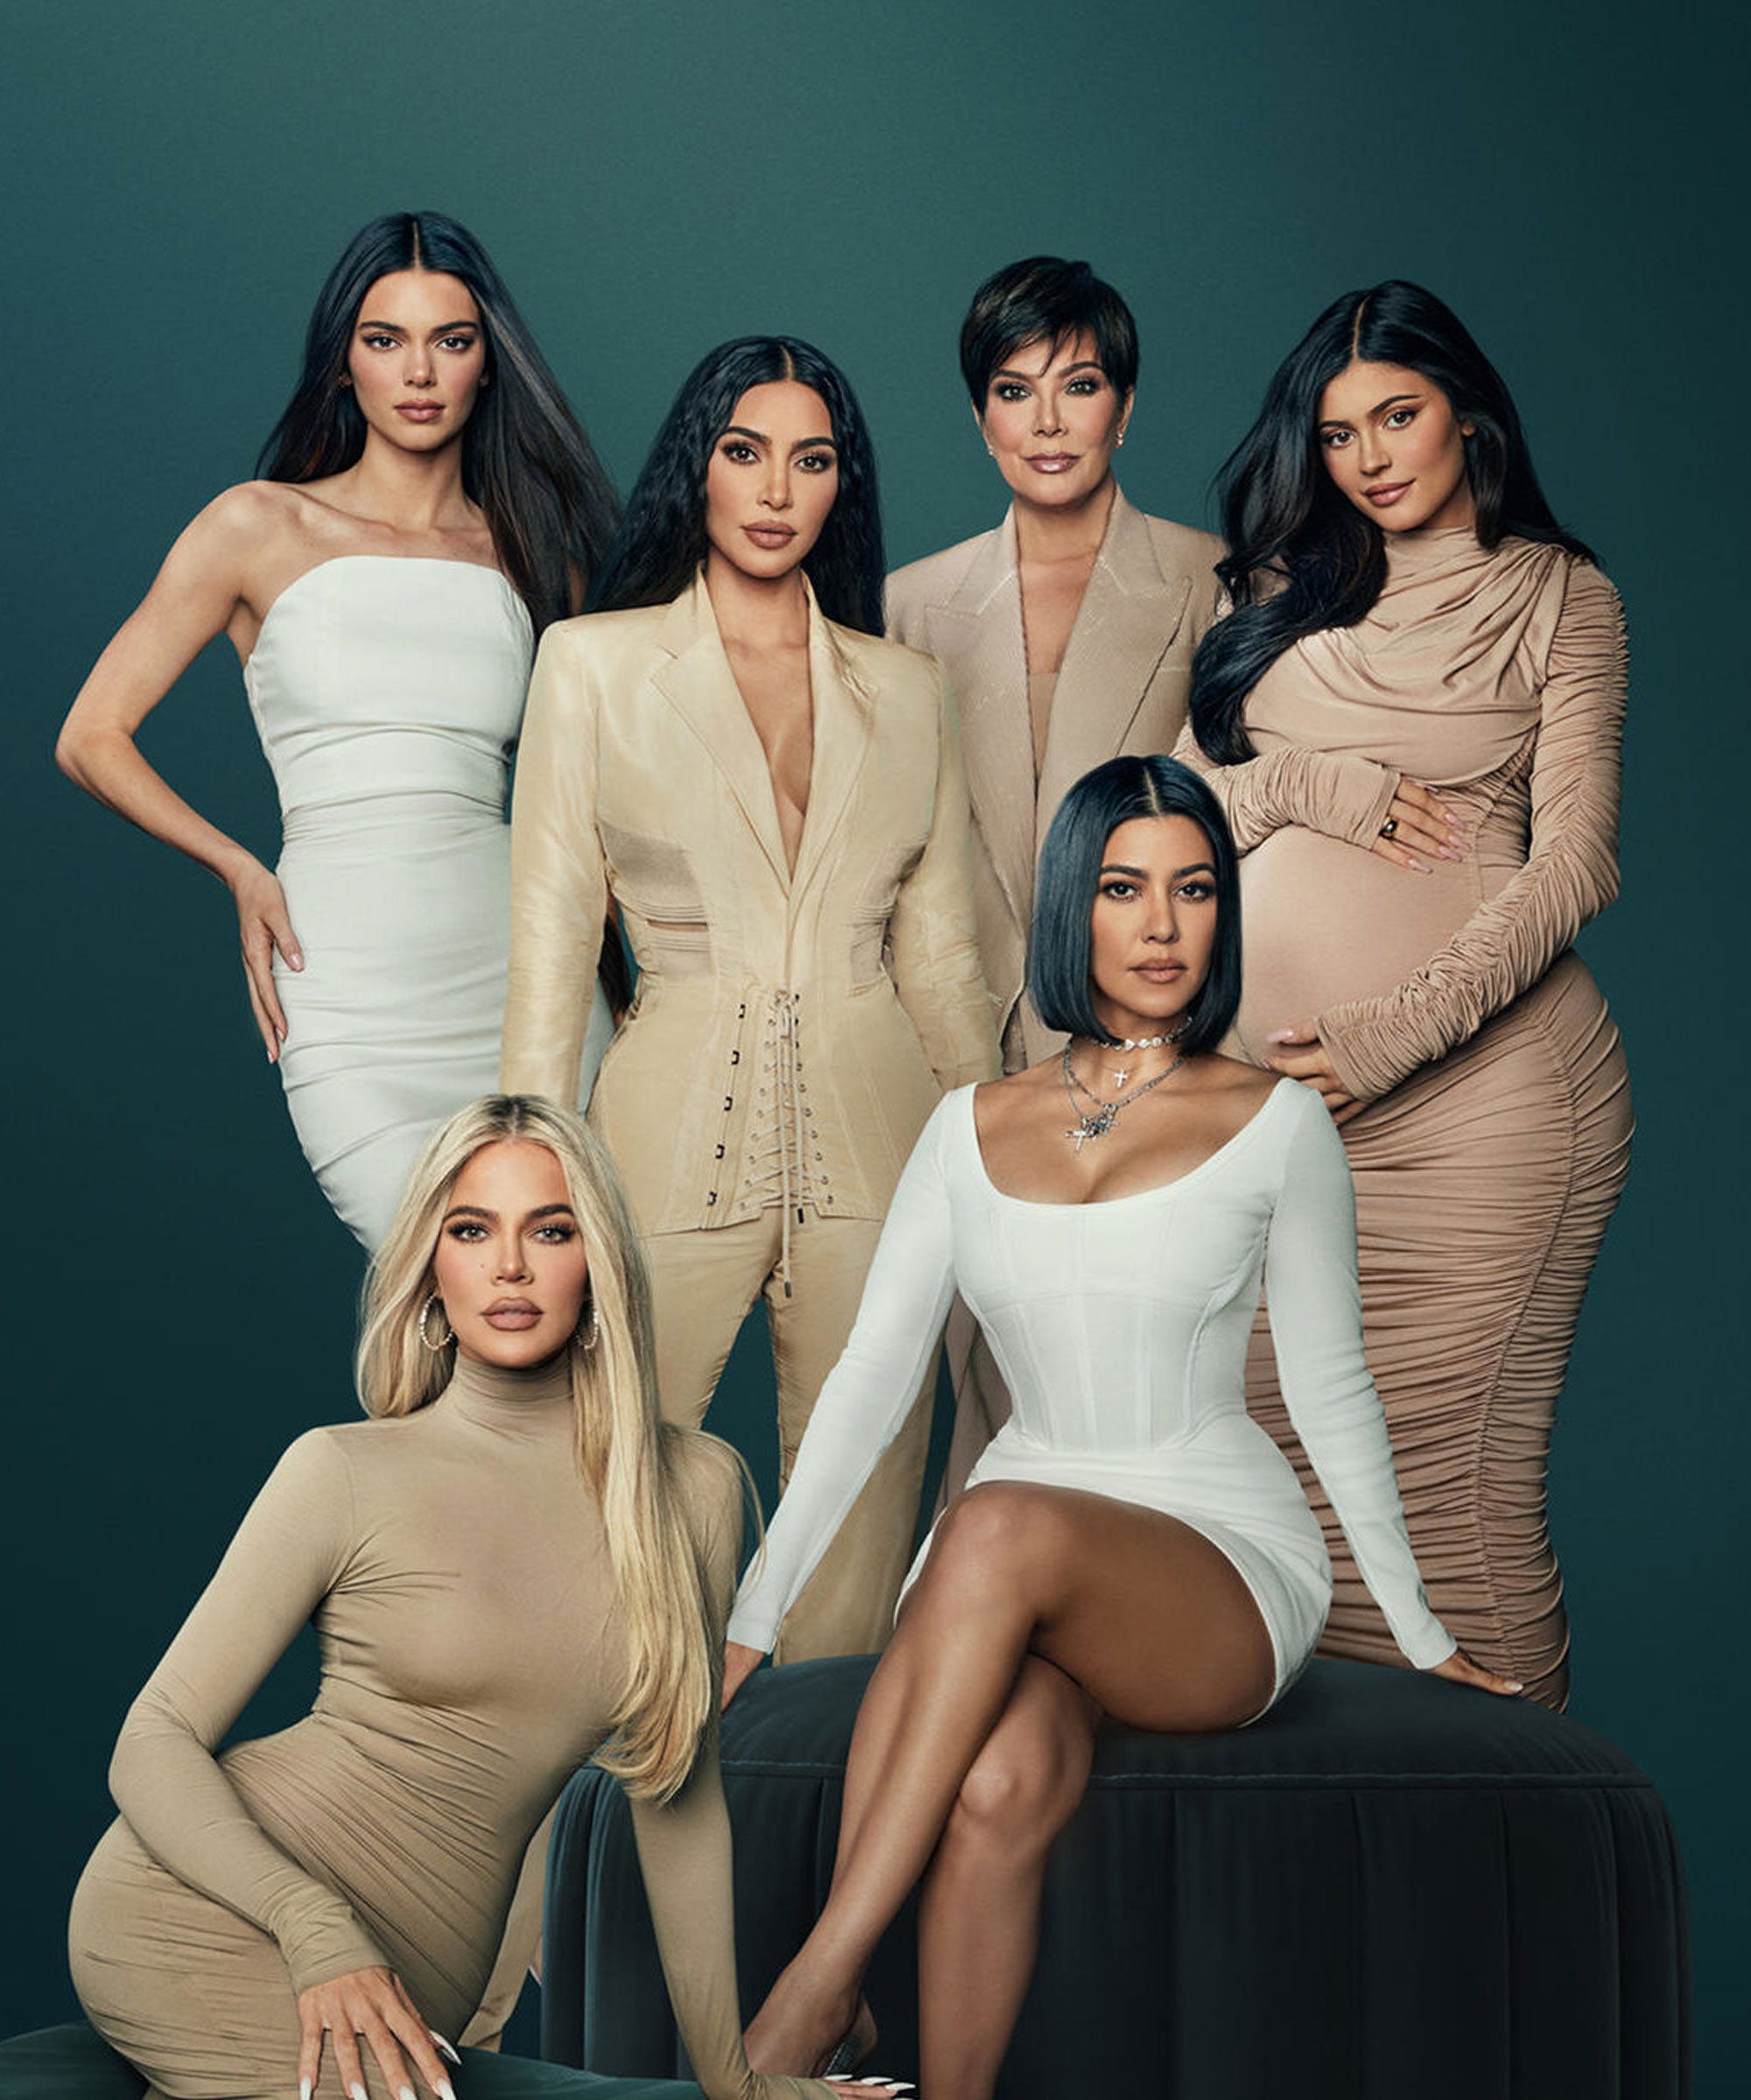 Kim Kardashian Is the 'Riskiest' Celebrity Endorser for Fashion